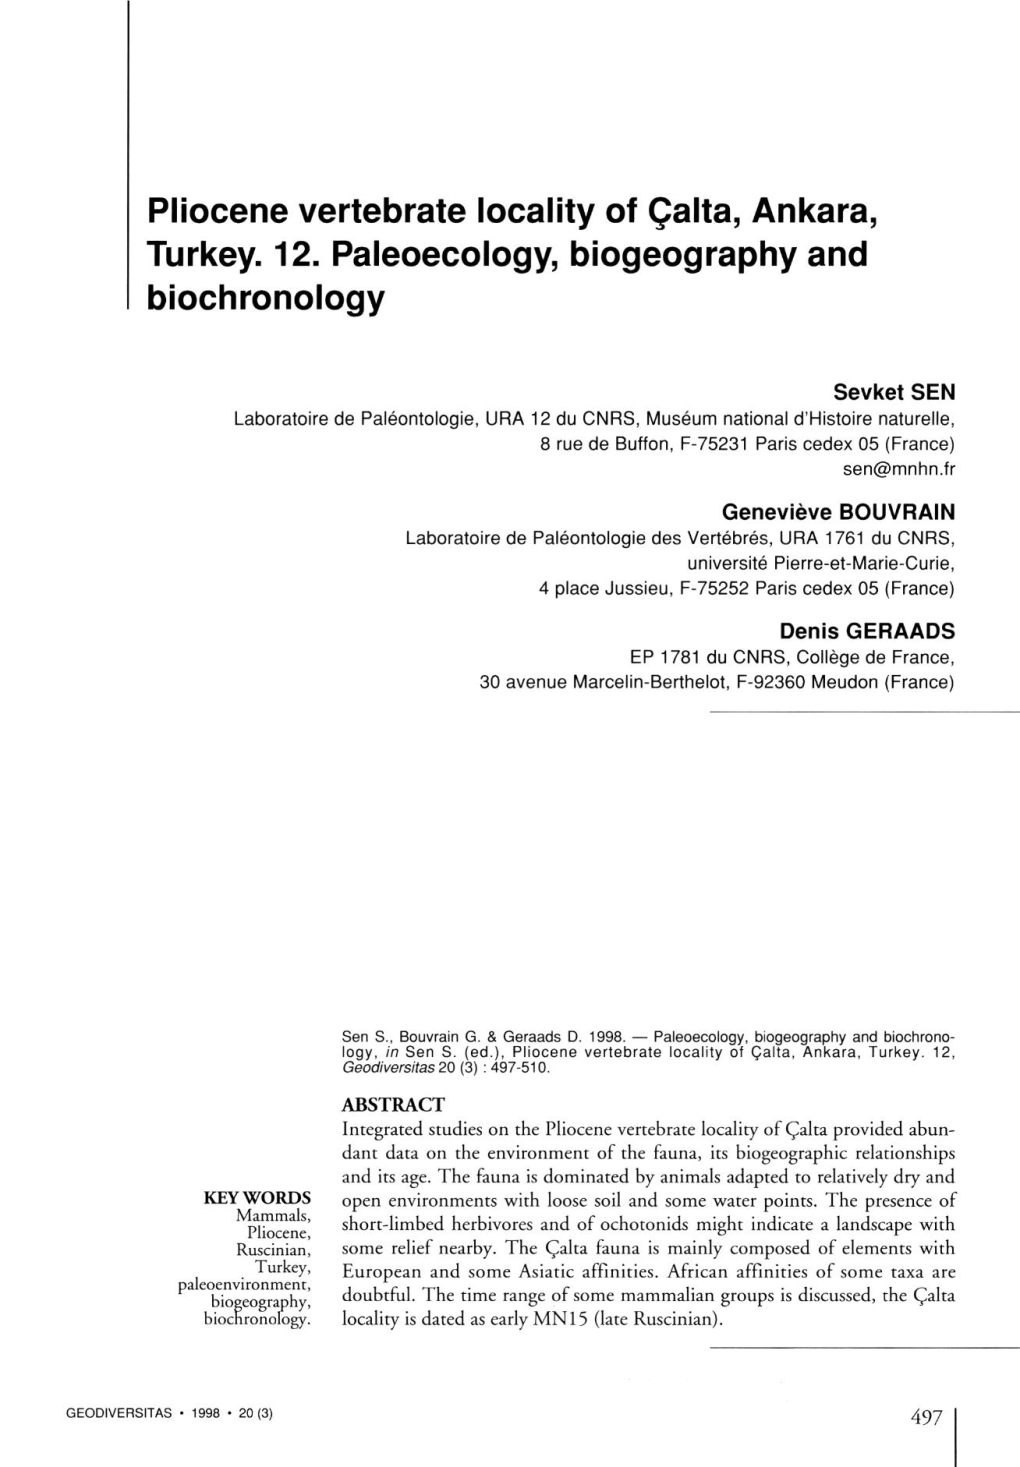 Pliocene Vertebrate Locality of Qalta, Ankara, Turkey. 12. Paleoecology, Biogeography and Biochronology